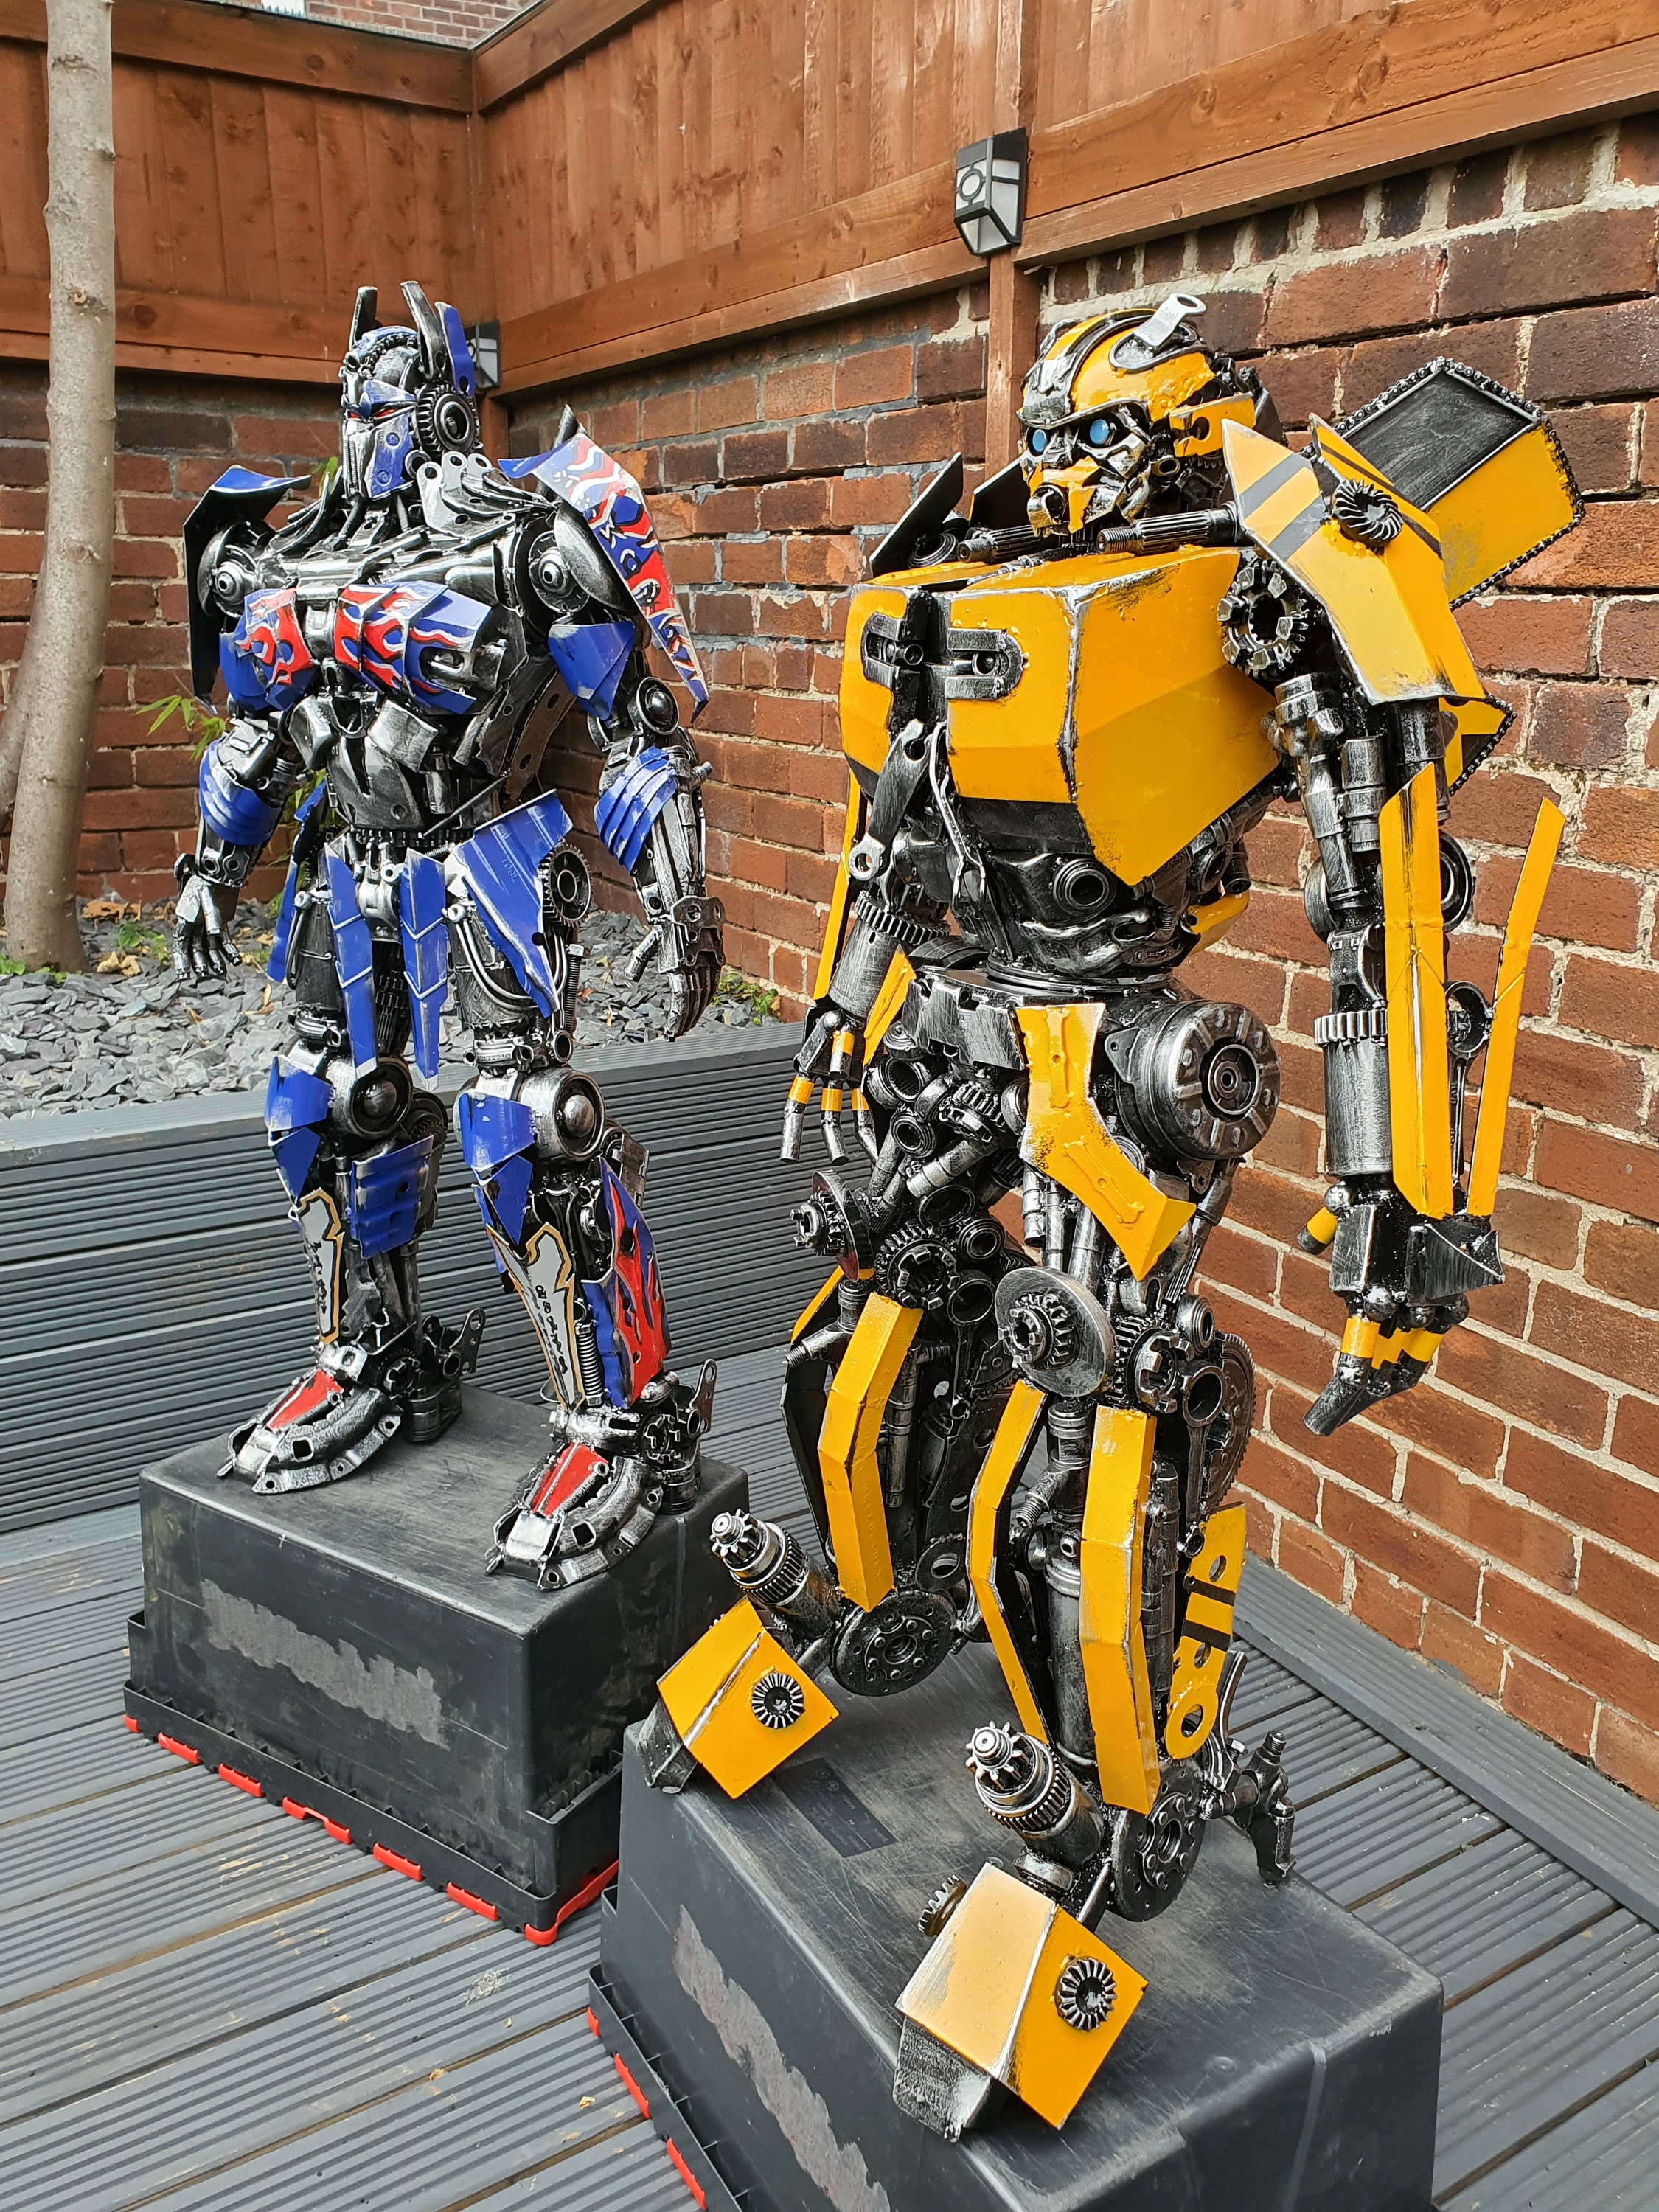 Transformers Bumblebee and Optimas Prime 120cm Sci-fi Handmade -  Israel